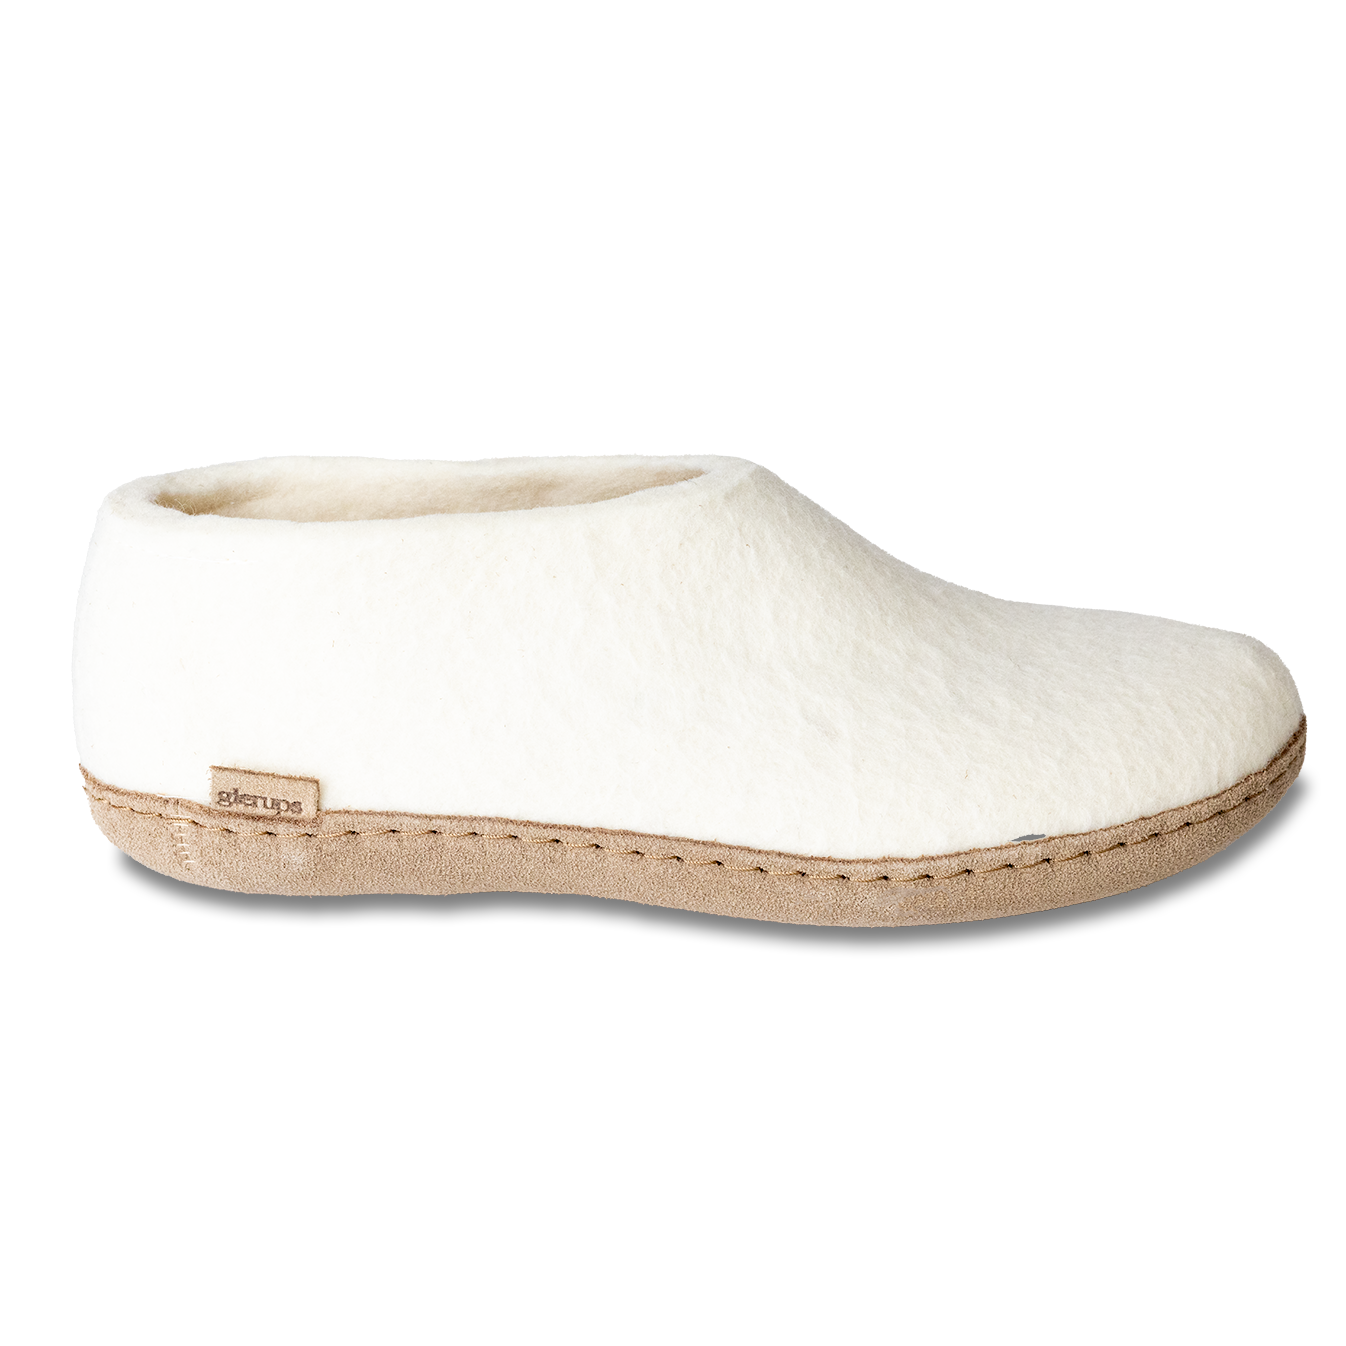 Glerups shoe suede sole white